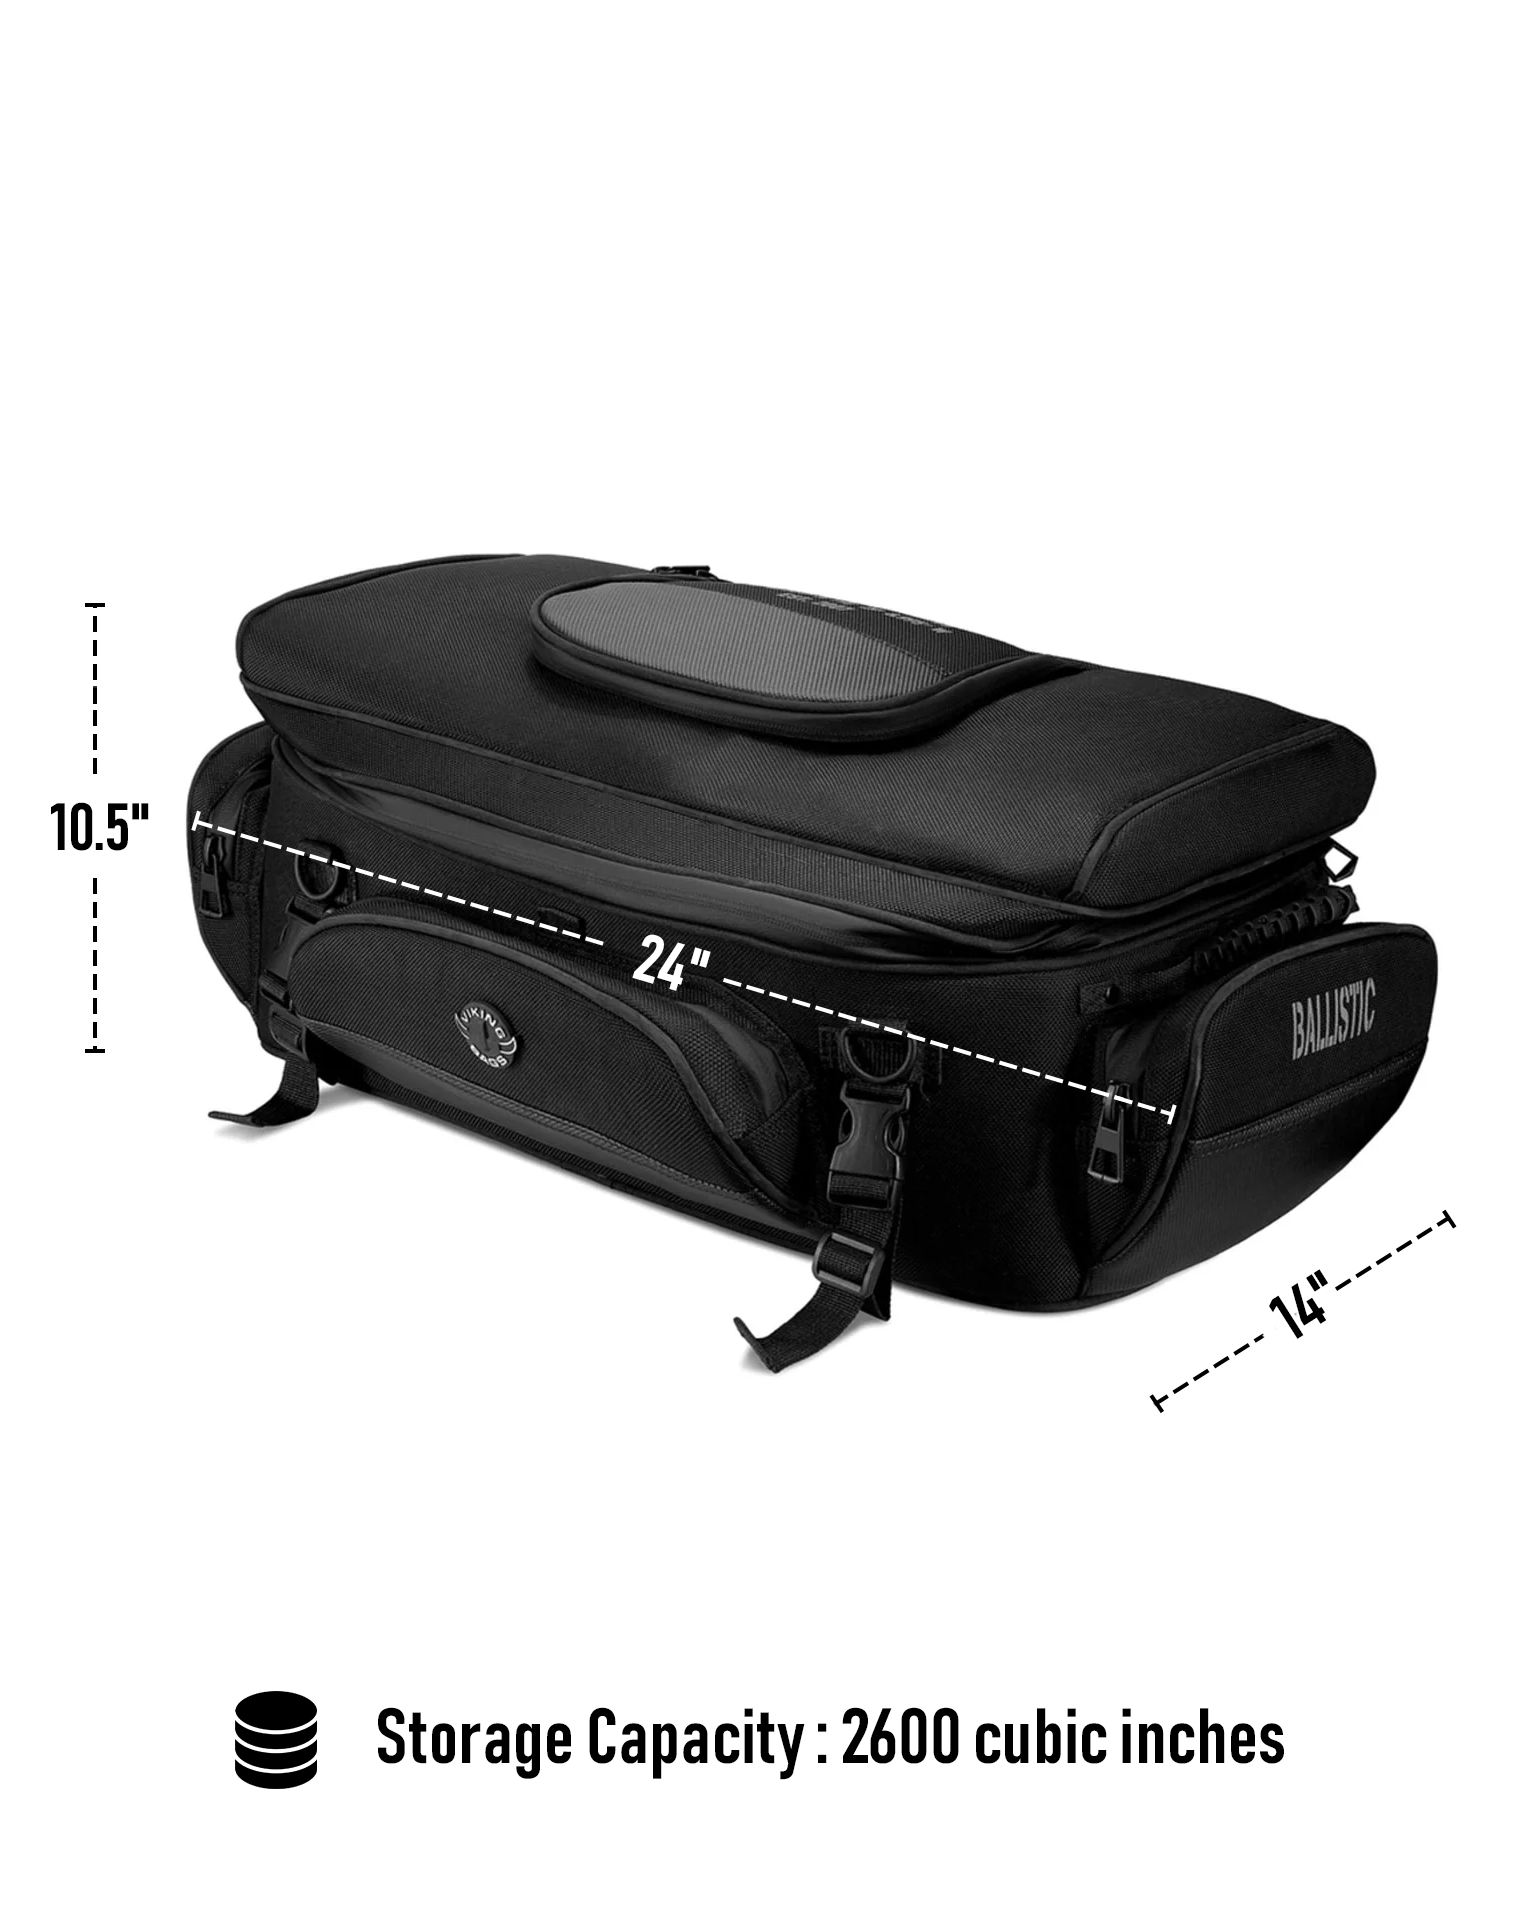 42L - Voyage Elite XL Triumph Motorcycle Luggage Rack Bag